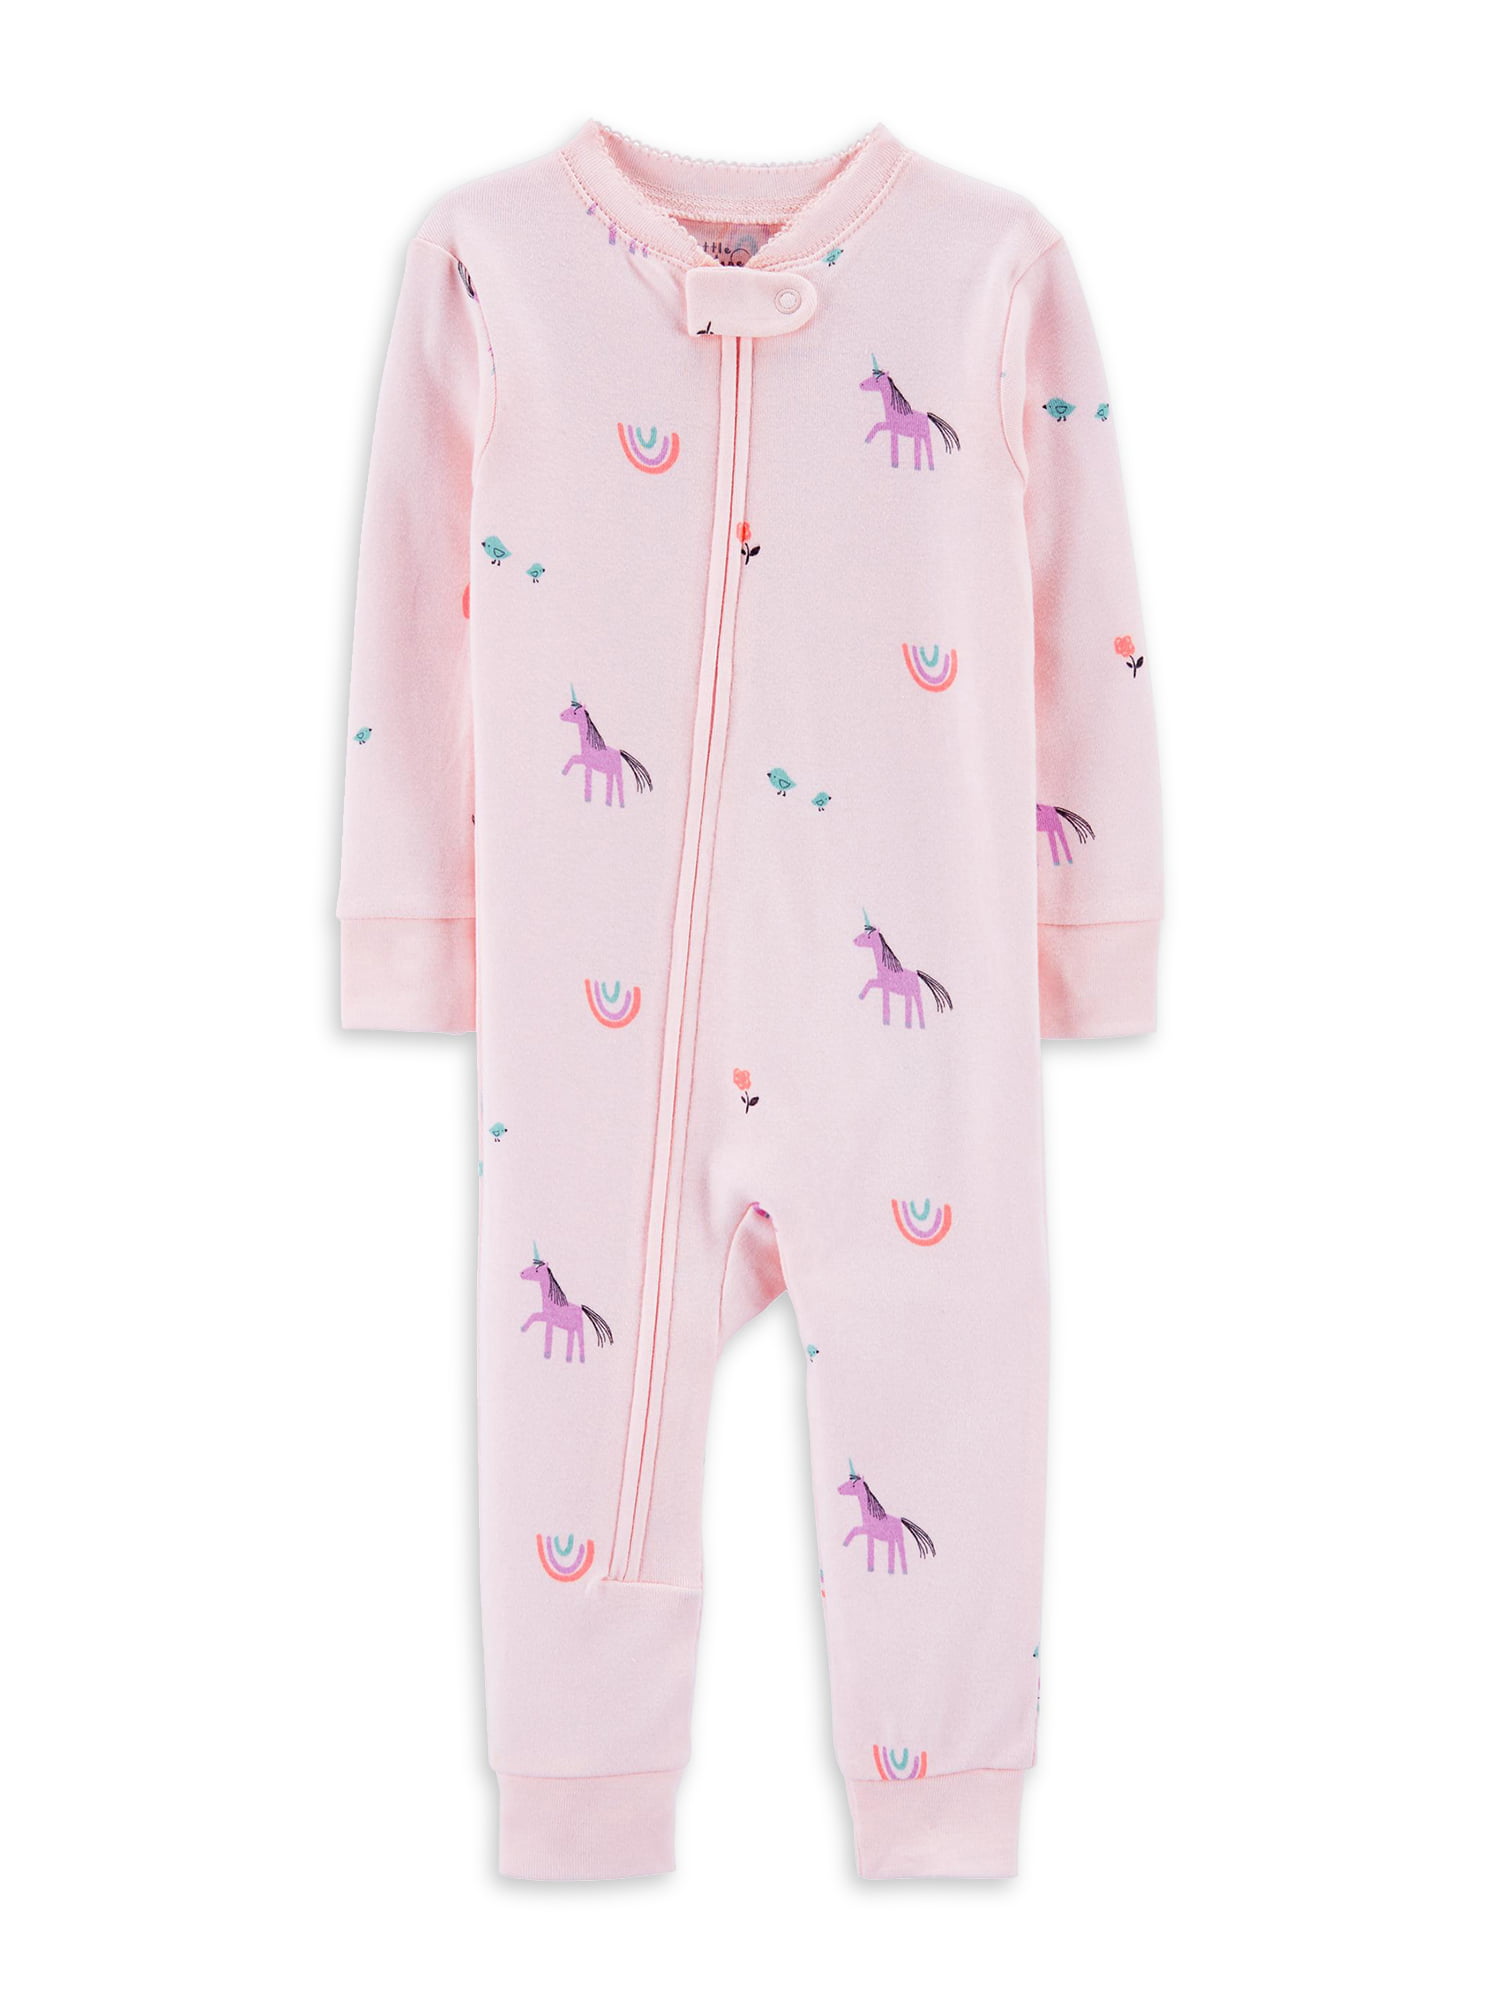 New Carter's Sea Creature Footless pajama PJs Girl Sleeper 1-Pc Snug Fit Cotton